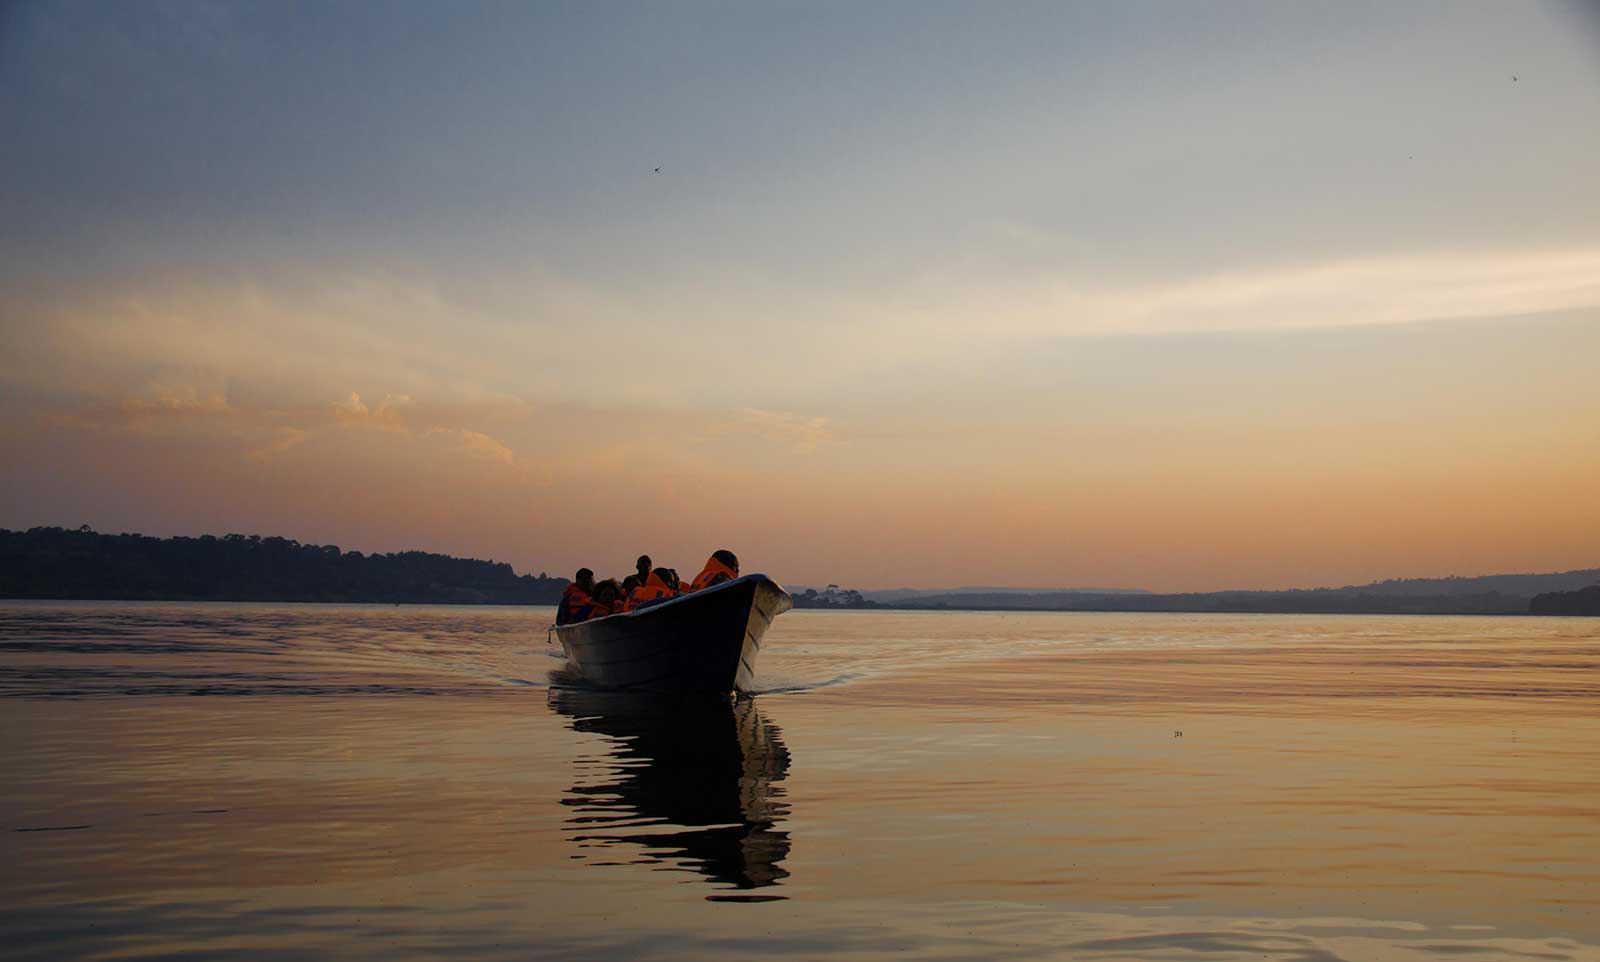 Boat to Lunkulu Island in sunset